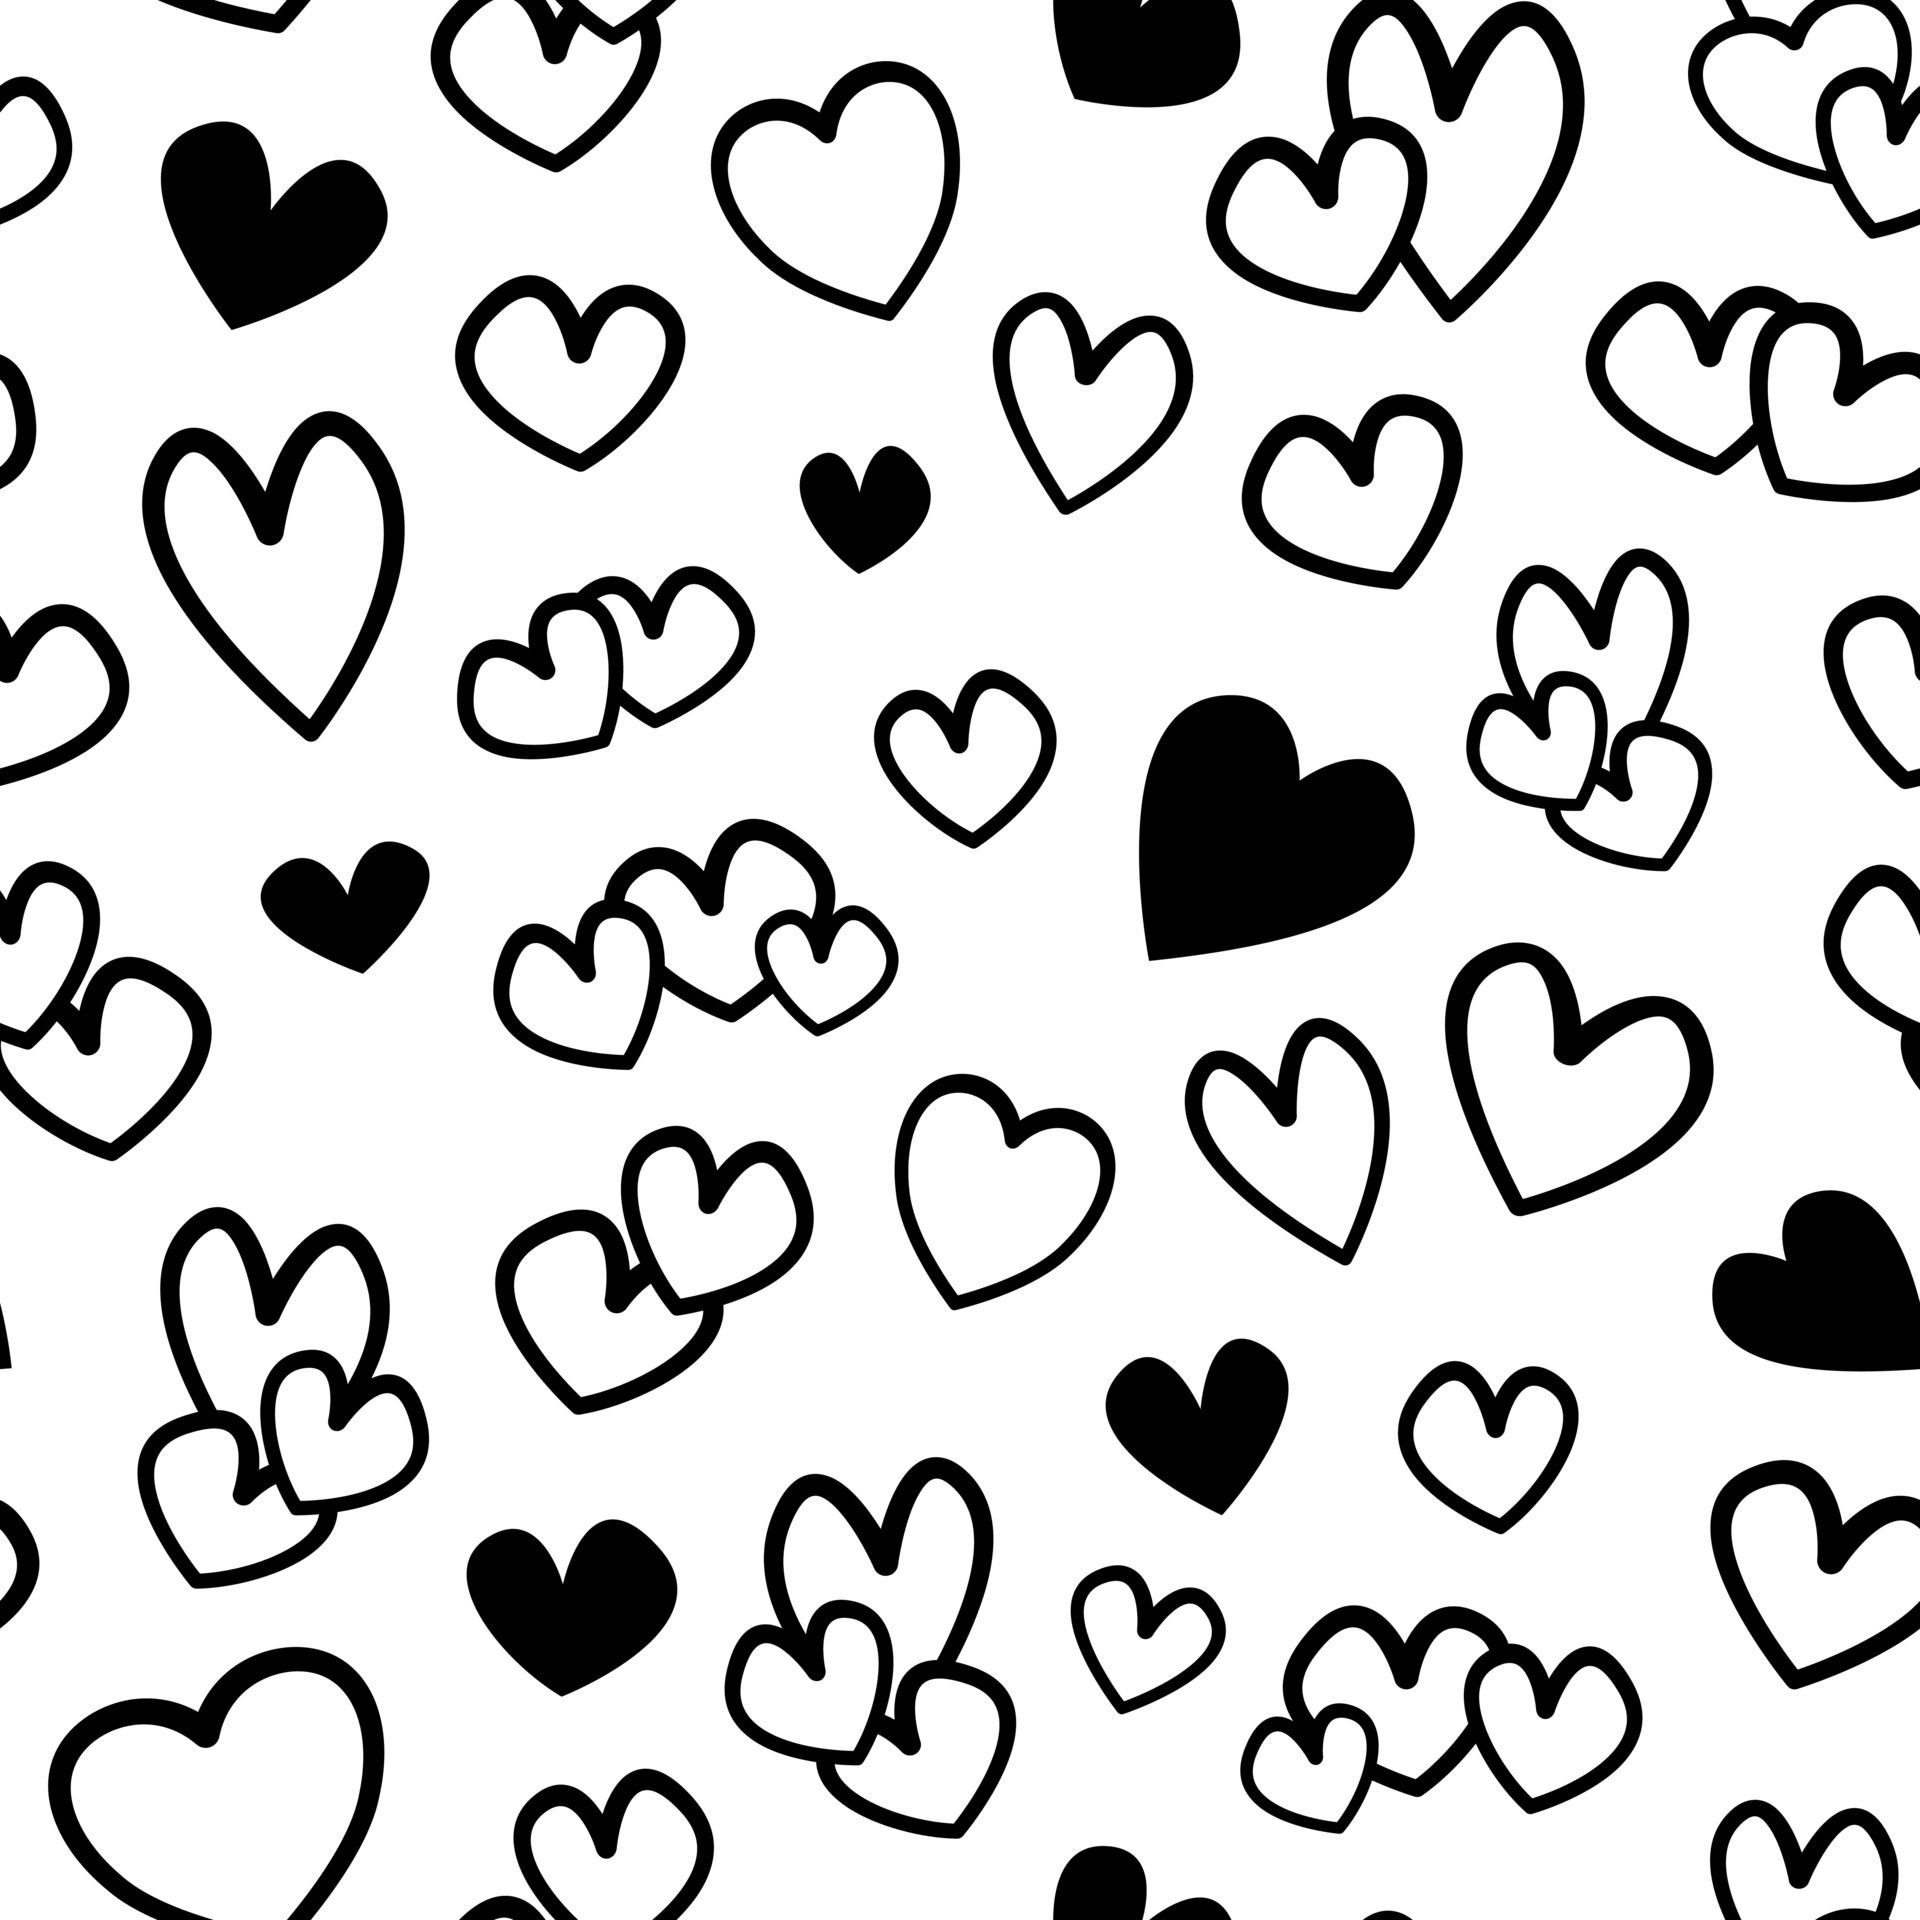 Fashion Material Scrapbook Paper Design Digital Art Hearts Print Valentine's Day Retro Vintage Seamless pattern